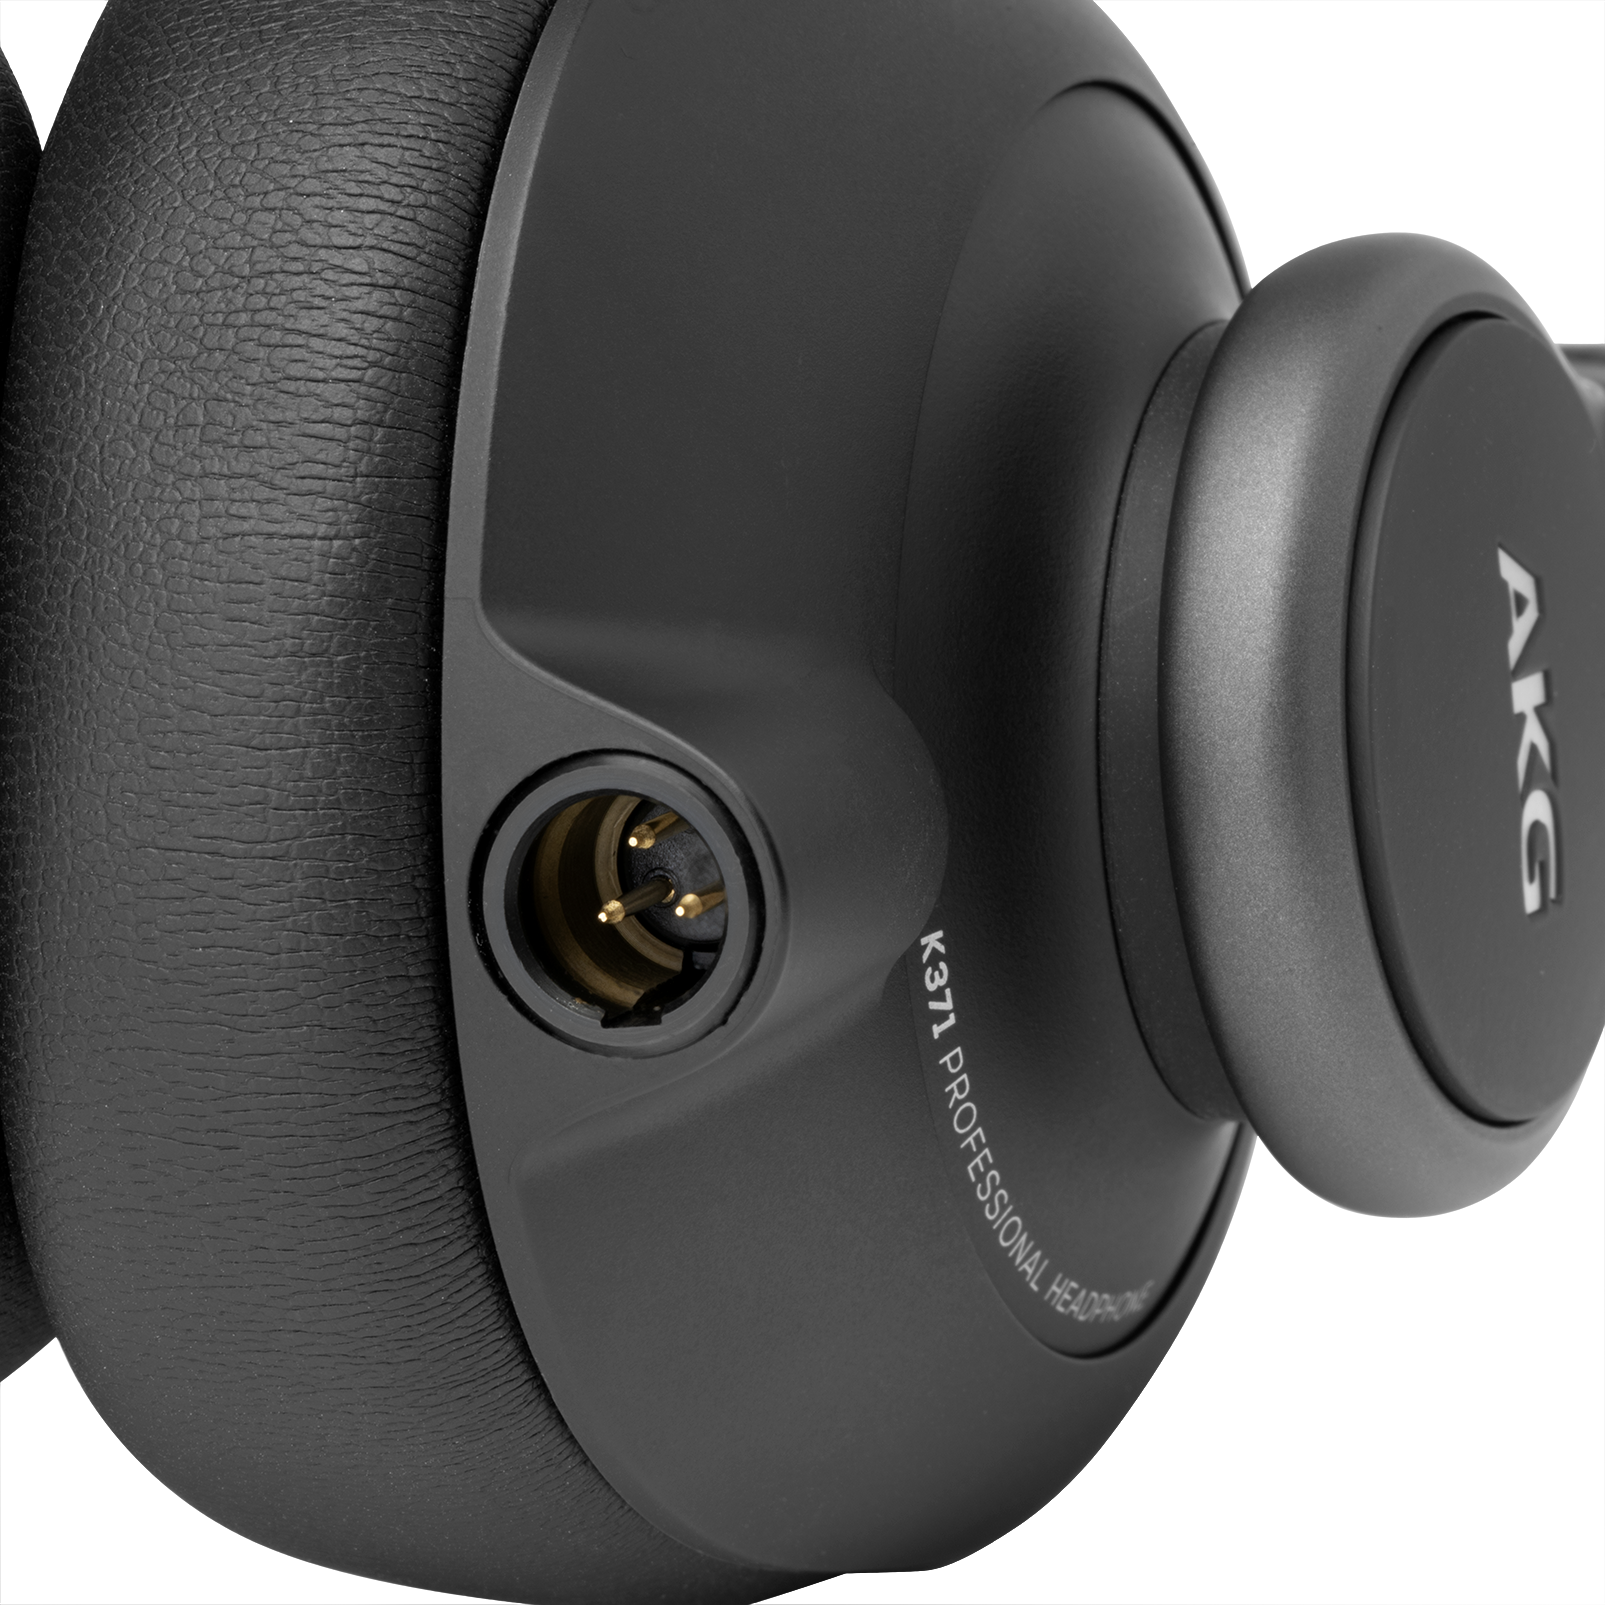 K371 - Black - Over-ear, closed-back, foldable studio headphones - Detailshot 4